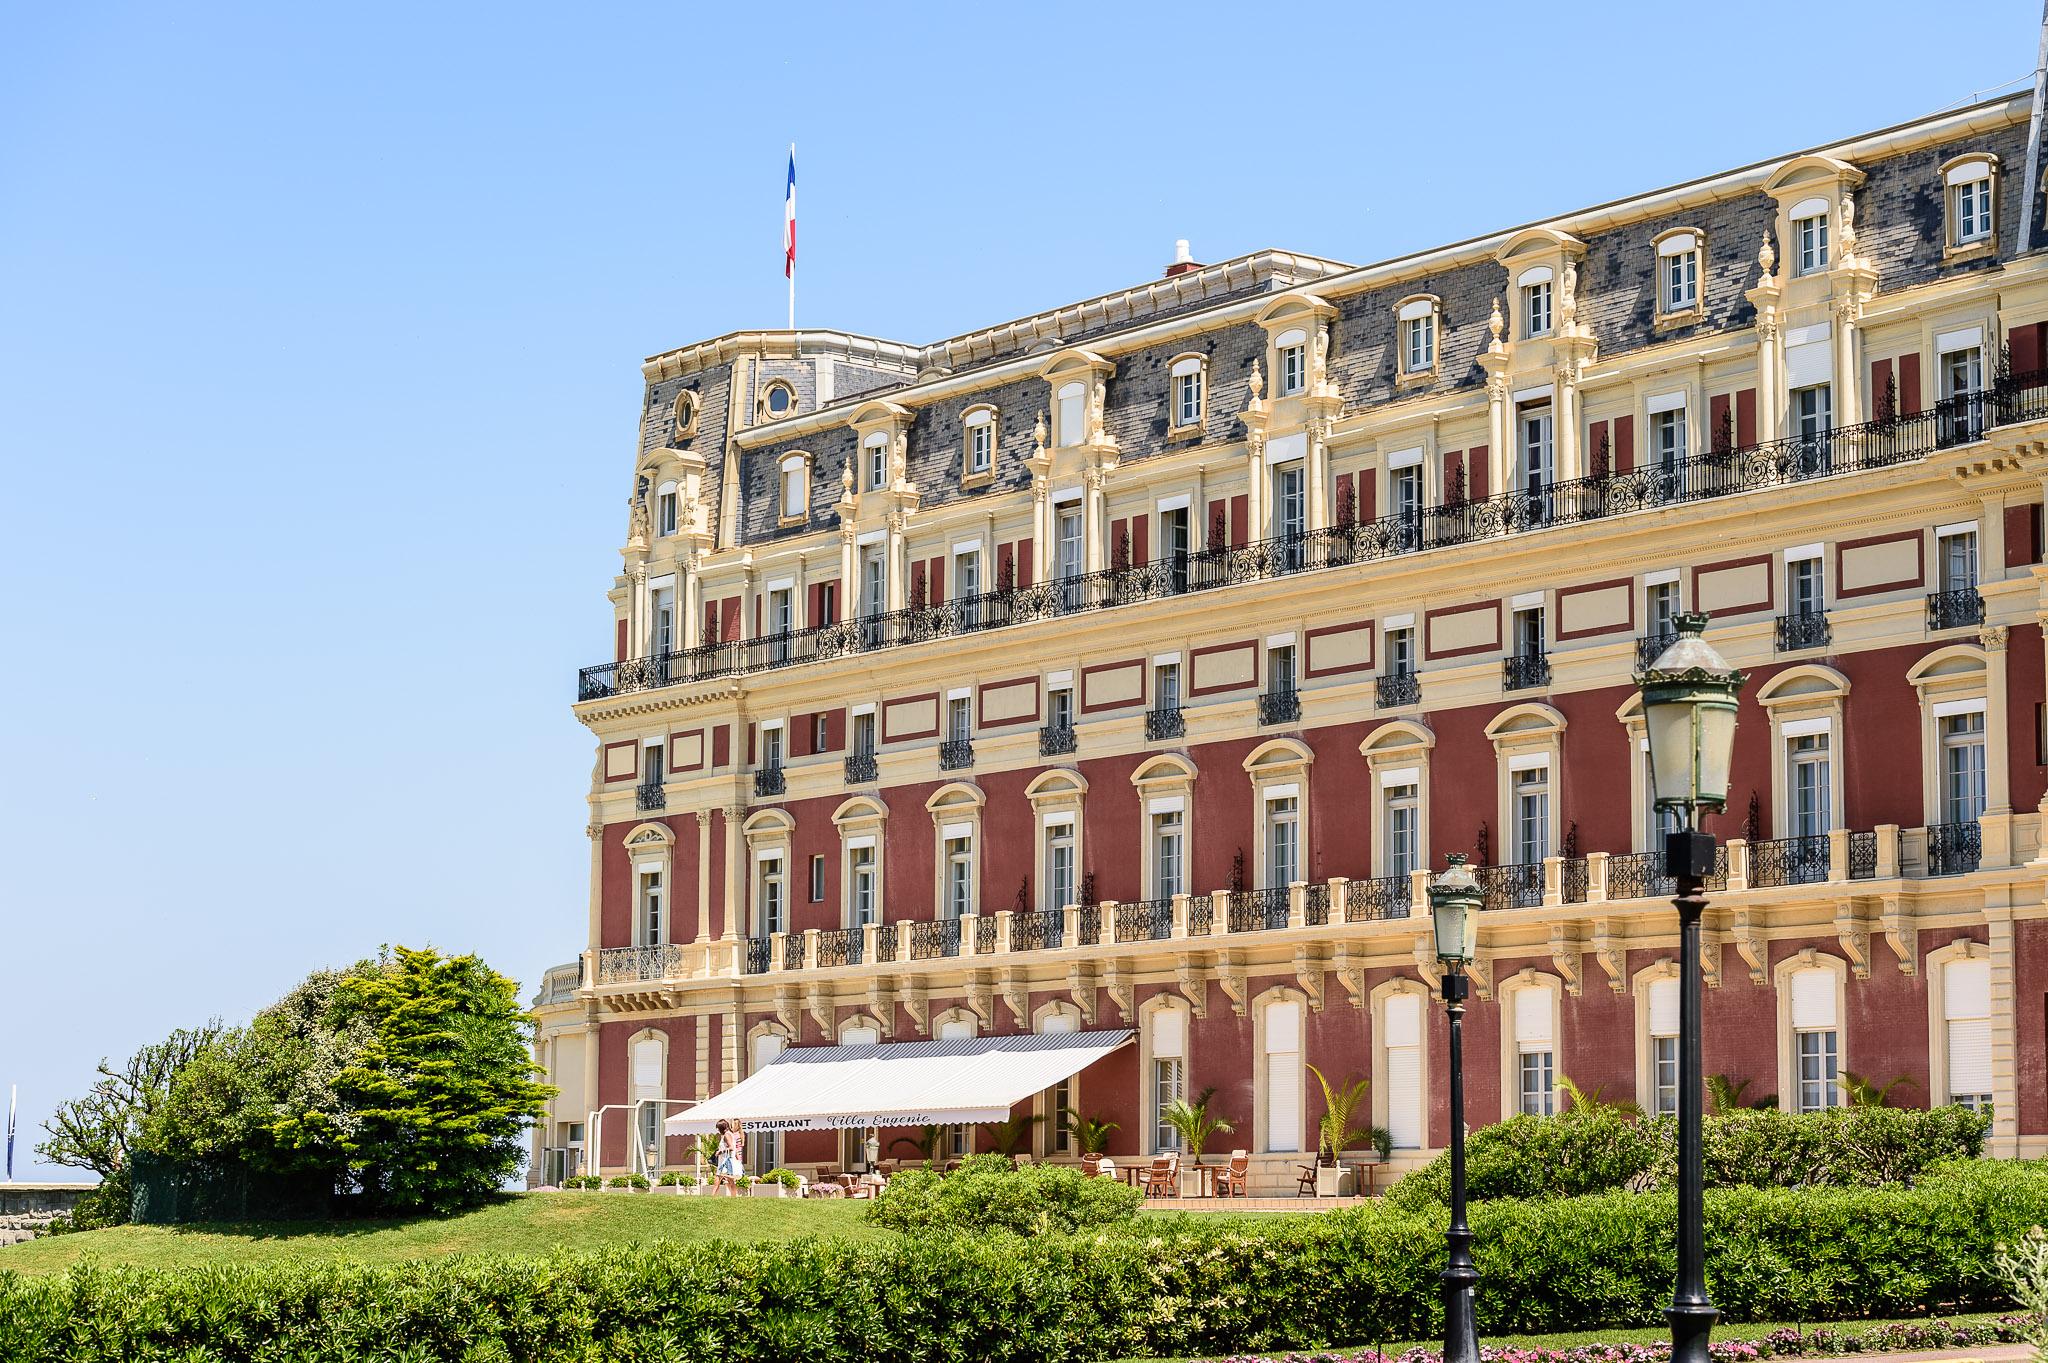 H?tel du Palais put Biarritz on the map